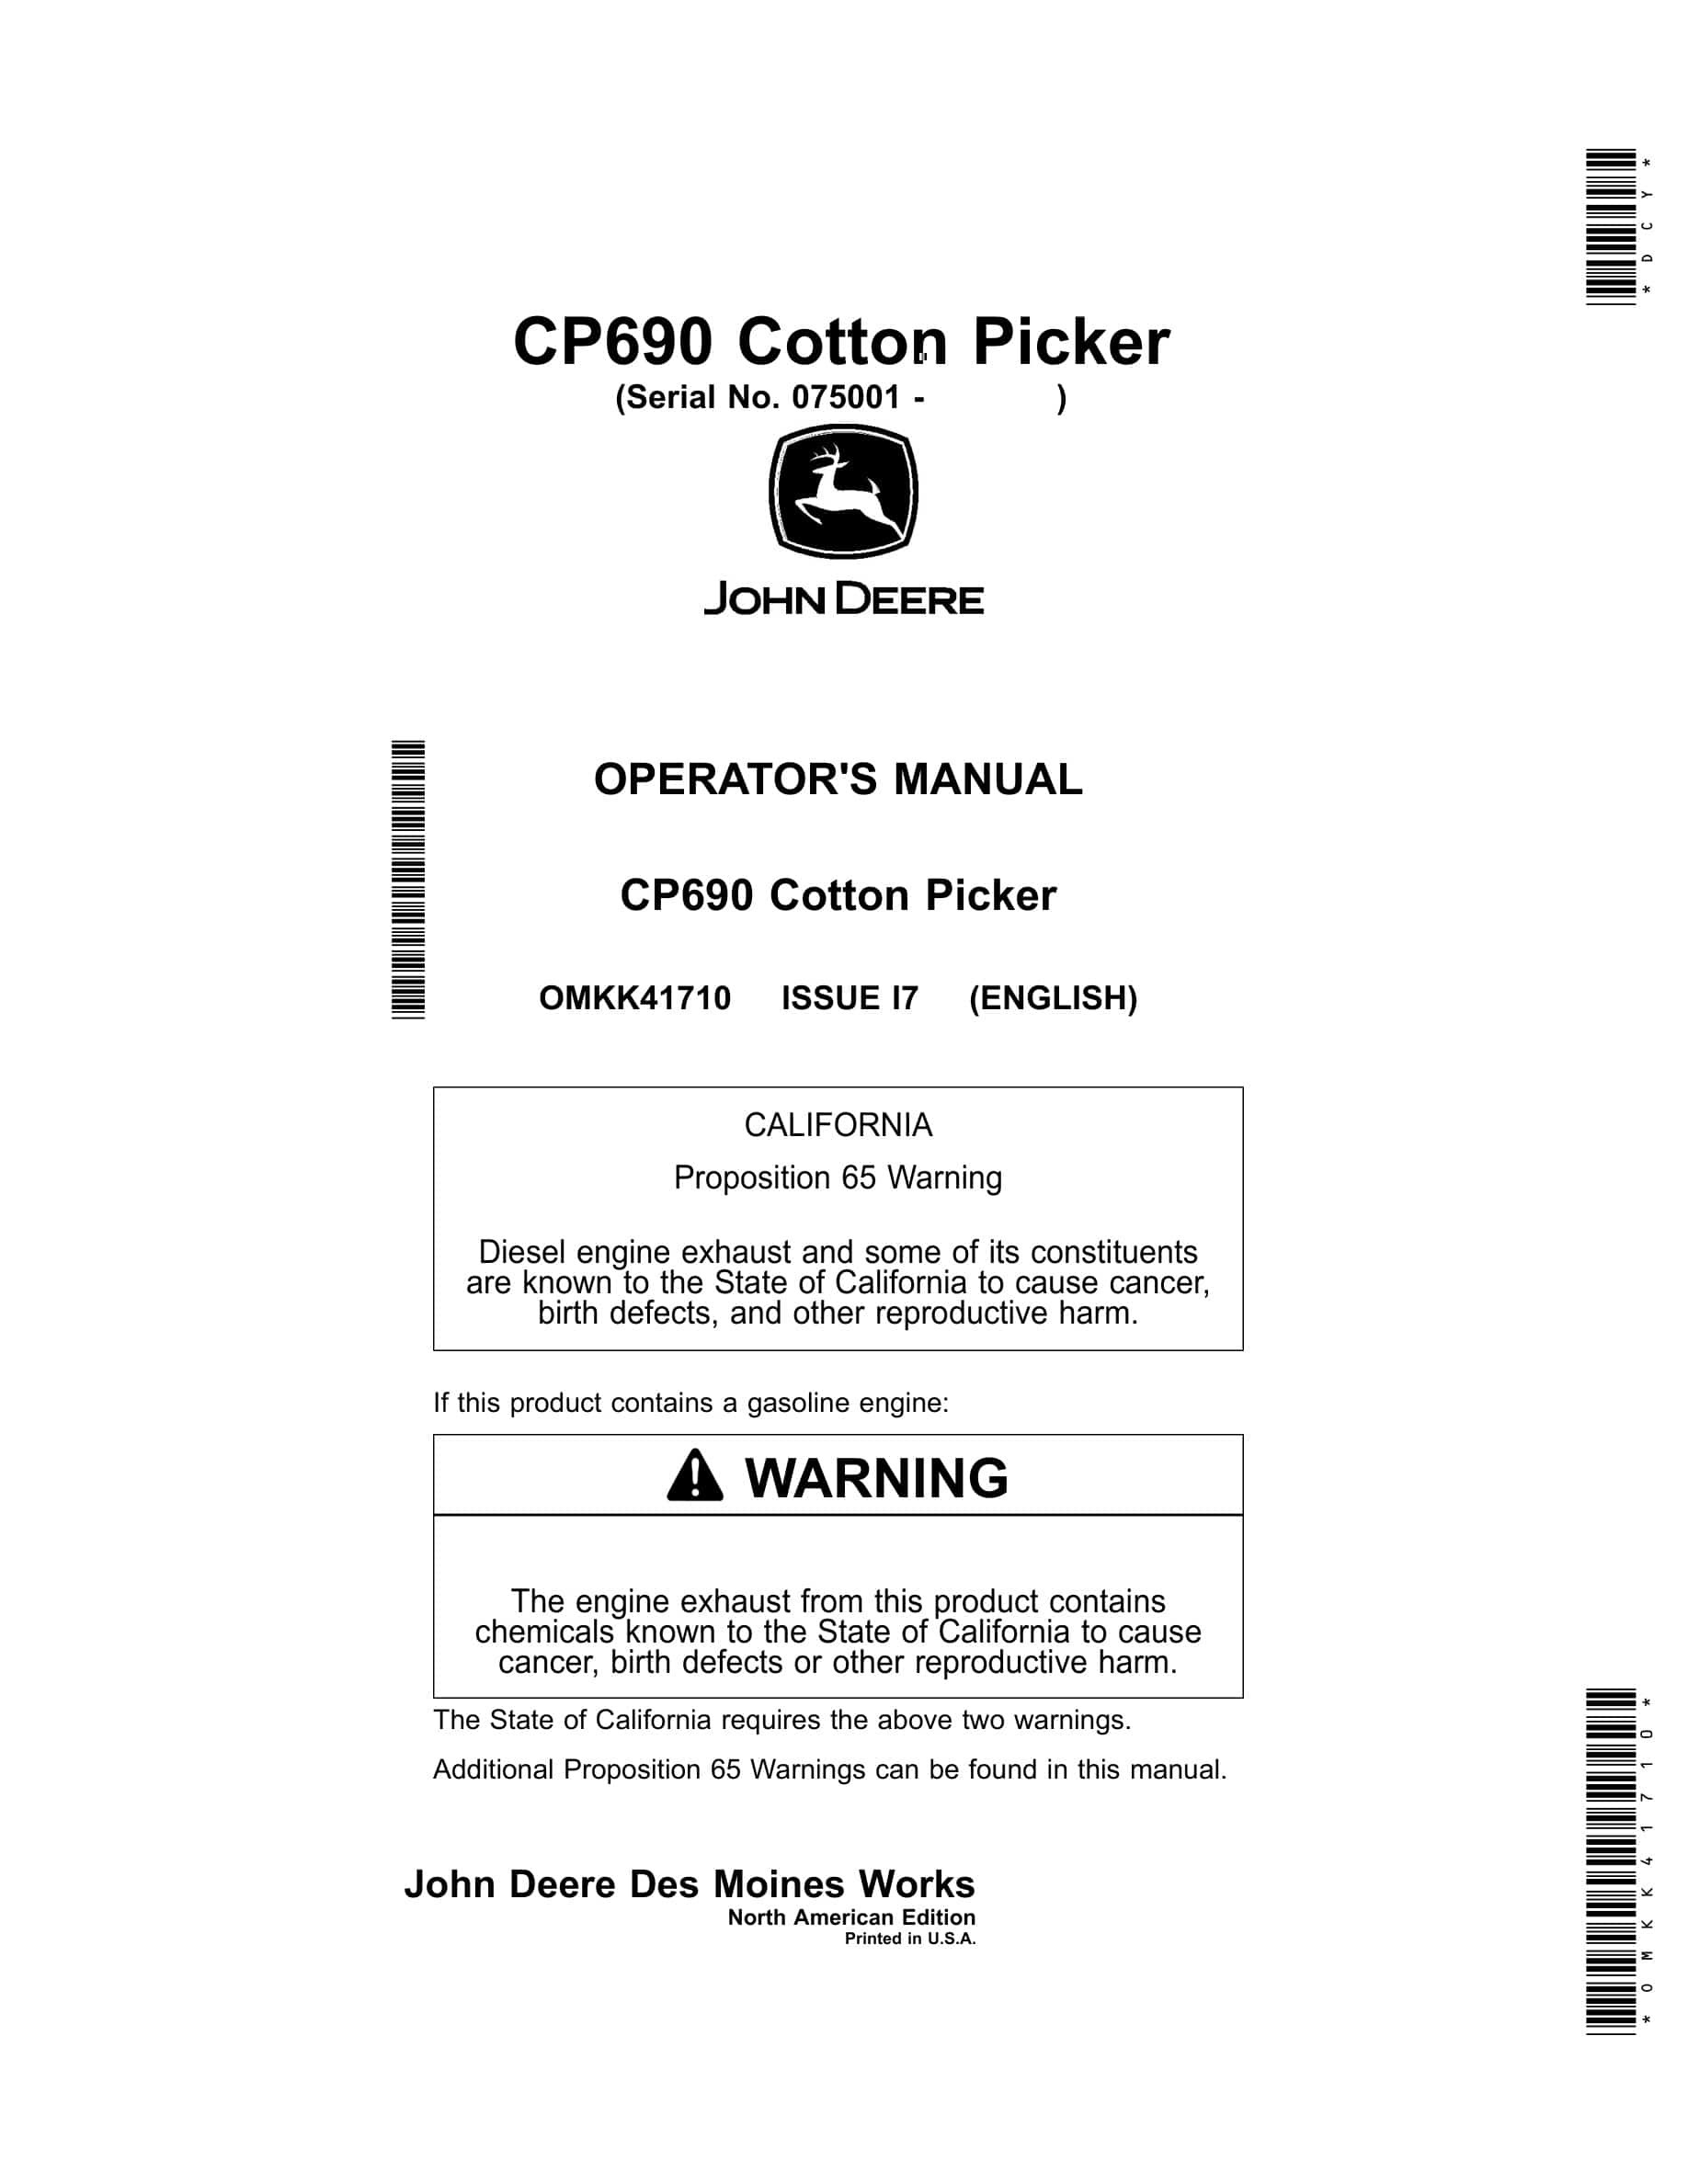 John Deere CP690 Cotton Picker Operator Manual OMKK41710-1